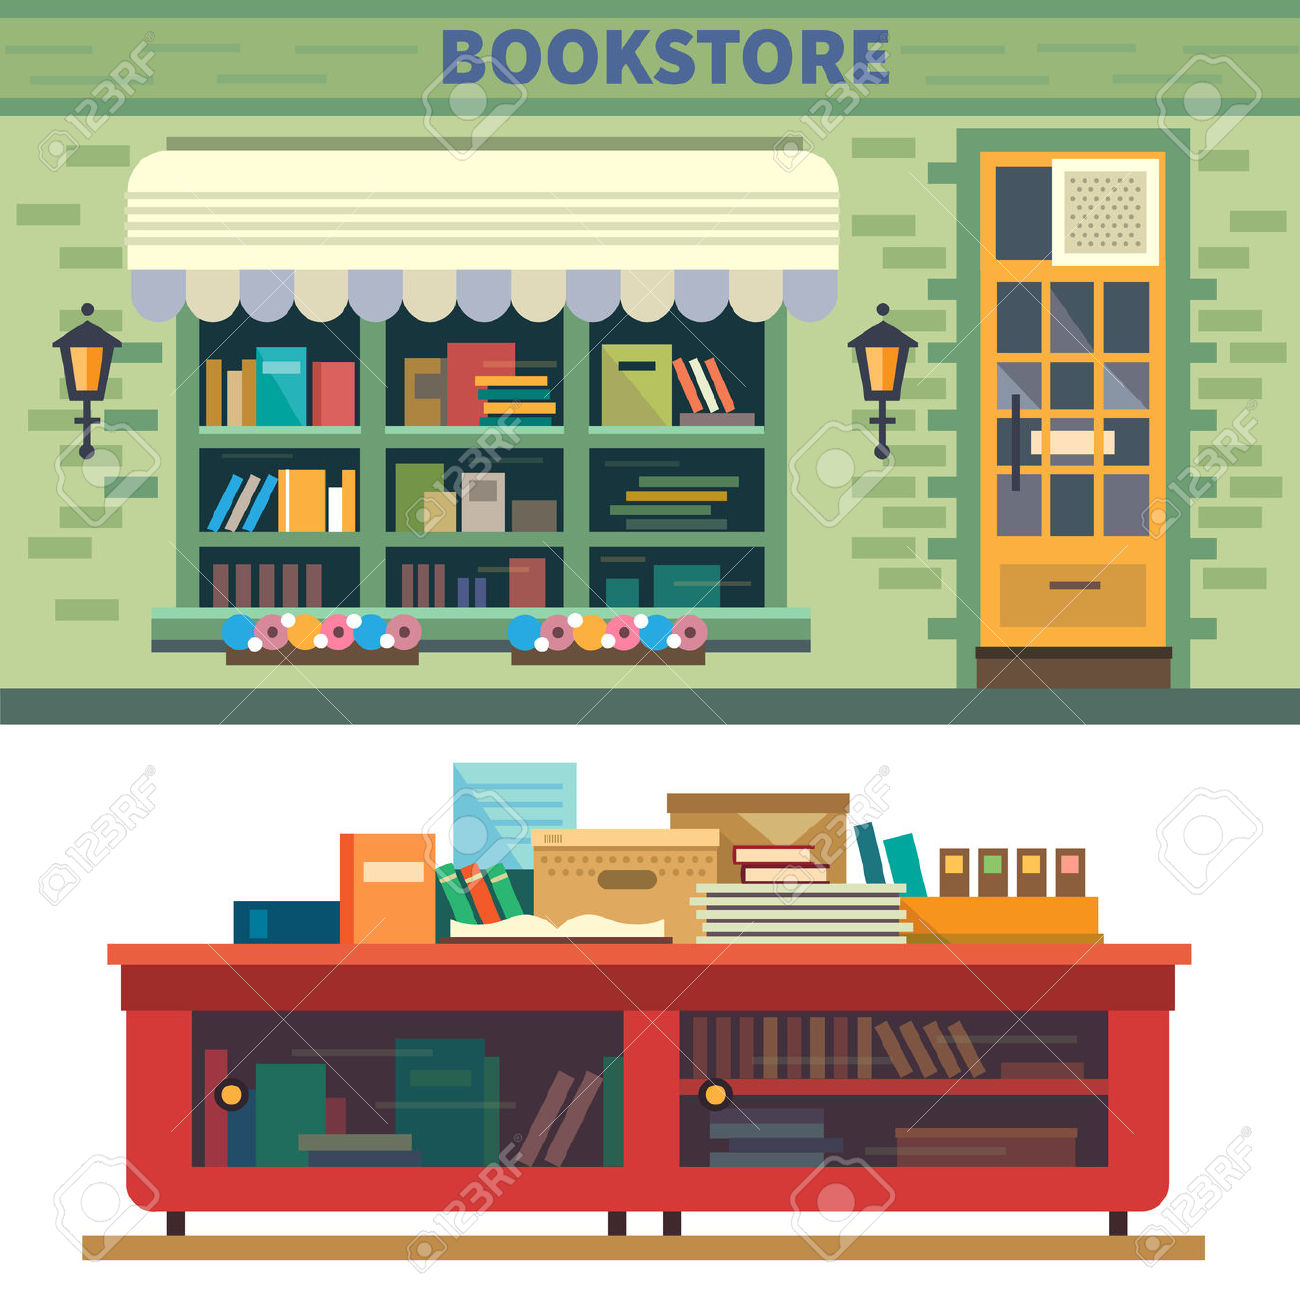 bookstore-2-building-clipart-